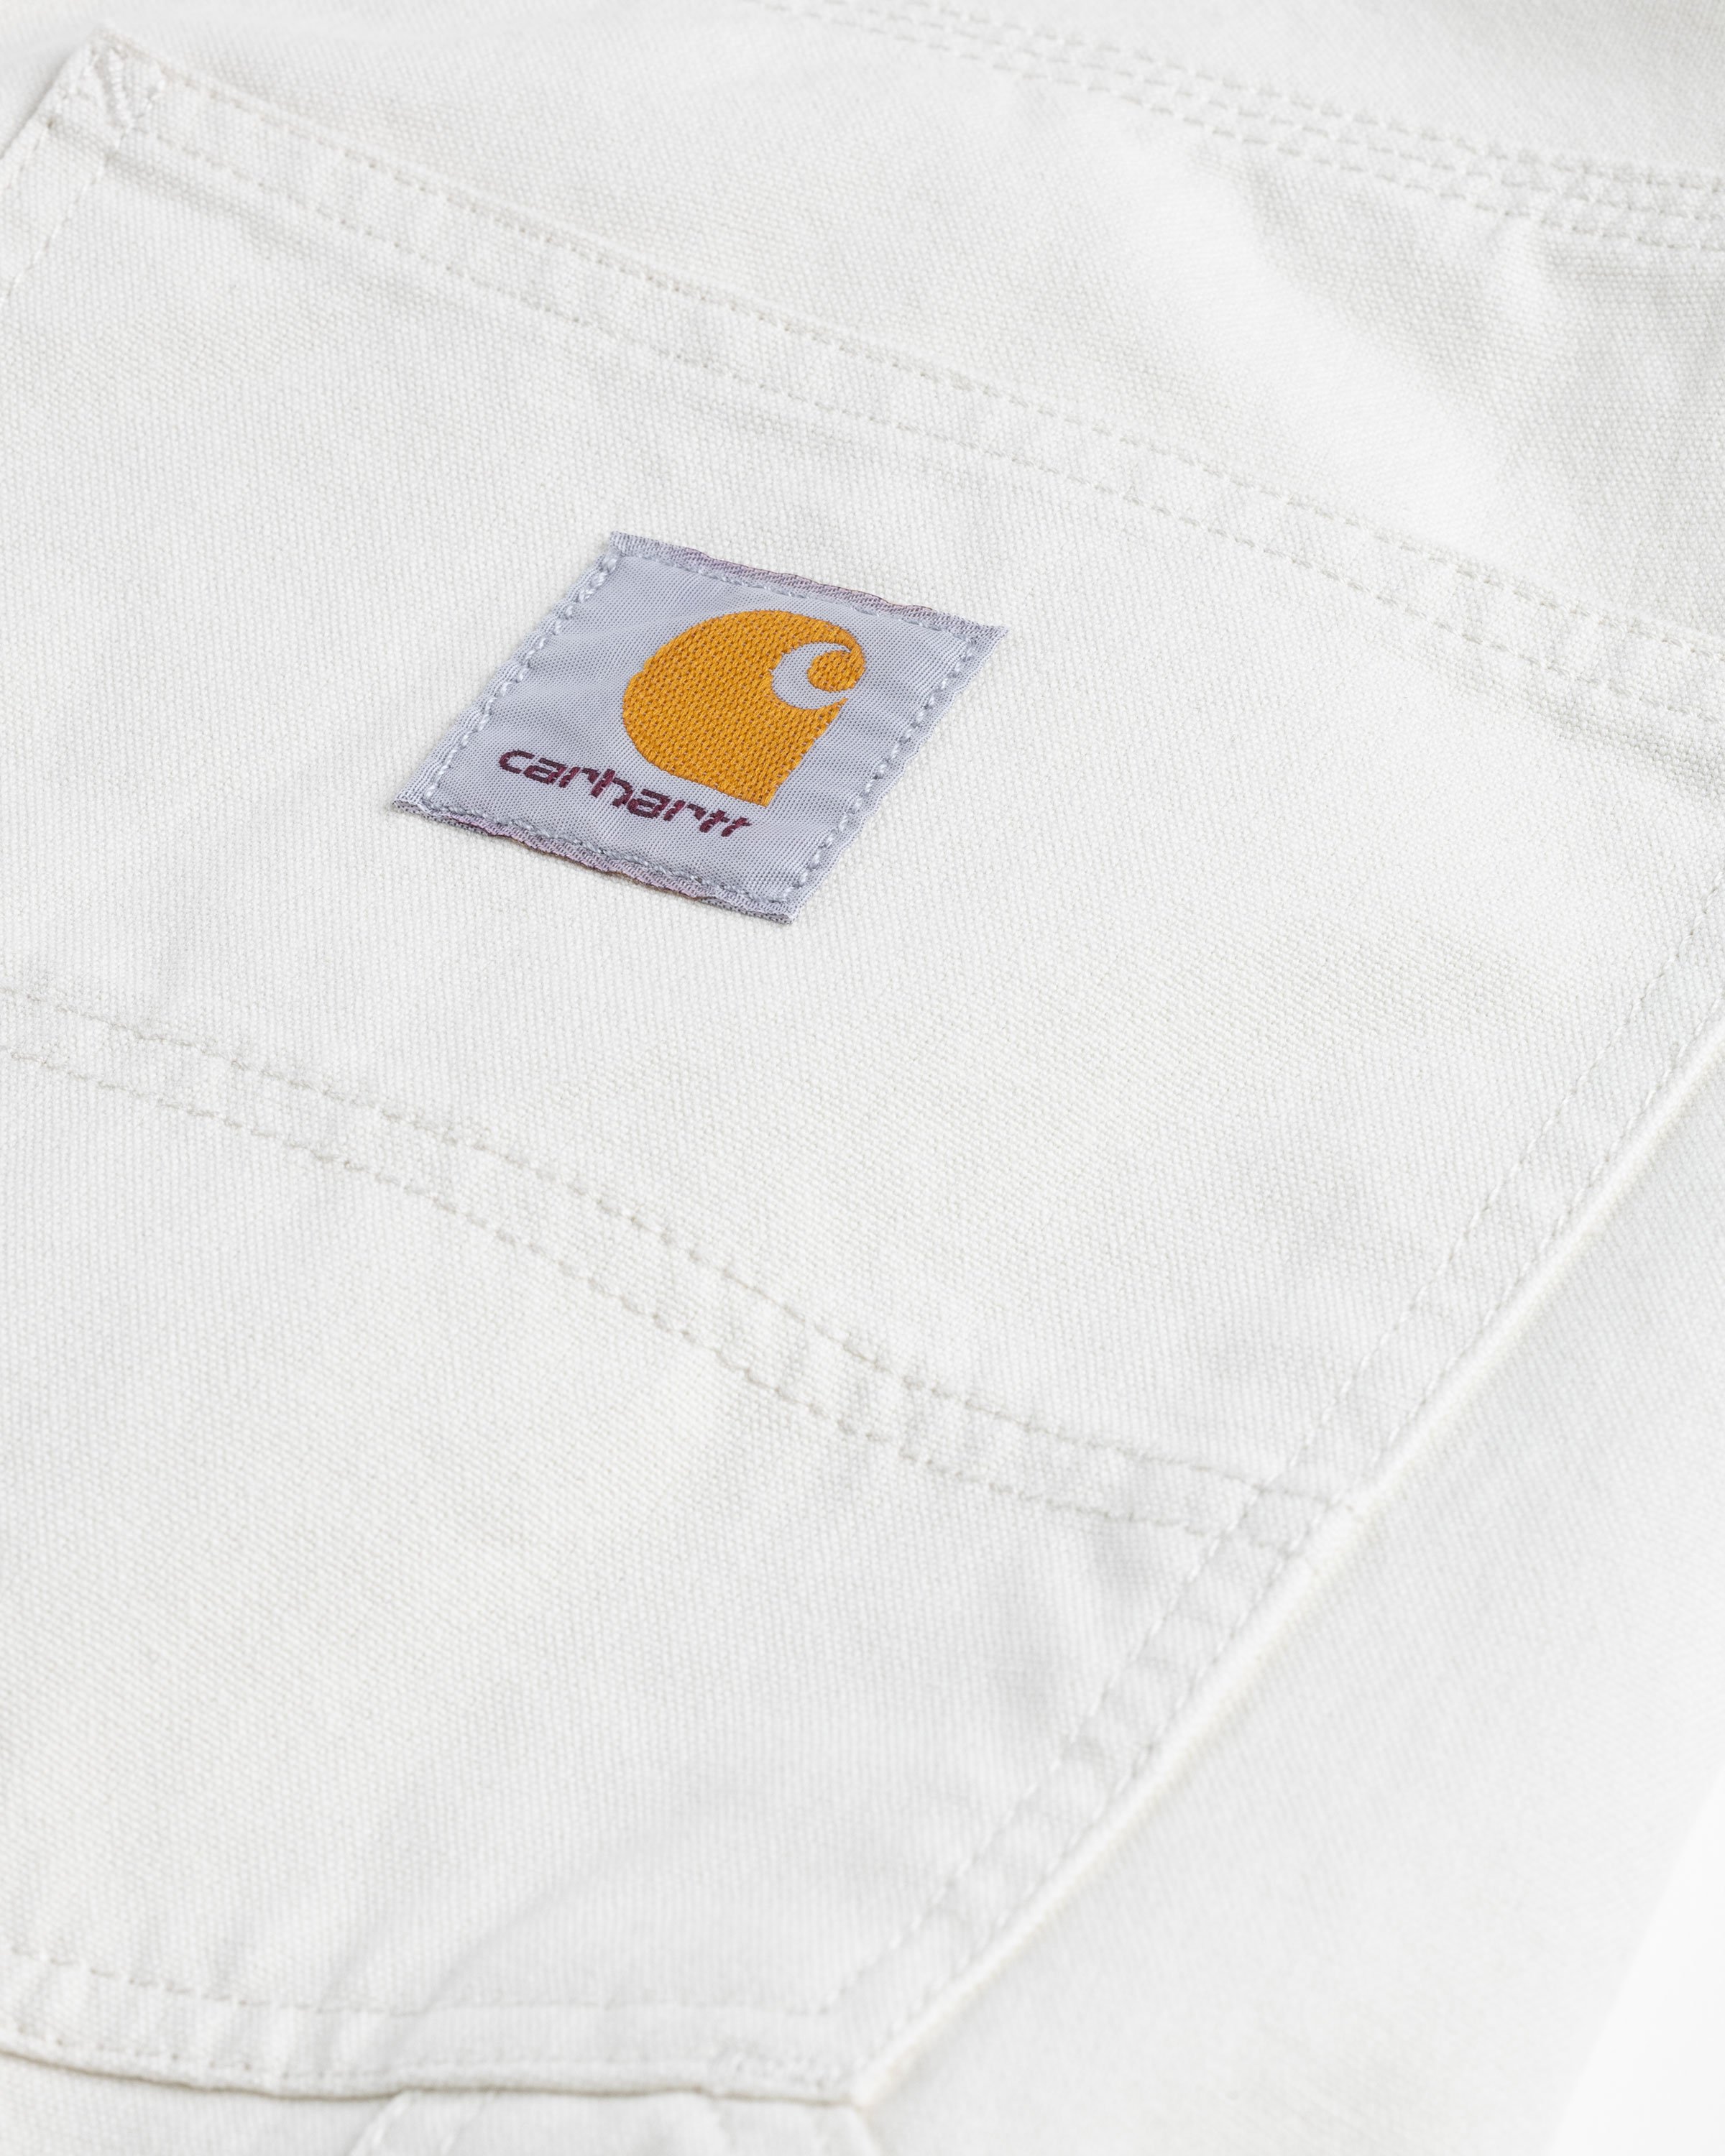 Carhartt WIP - Wide Panel Pant Salt/Rinsed - Clothing - White - Image 6